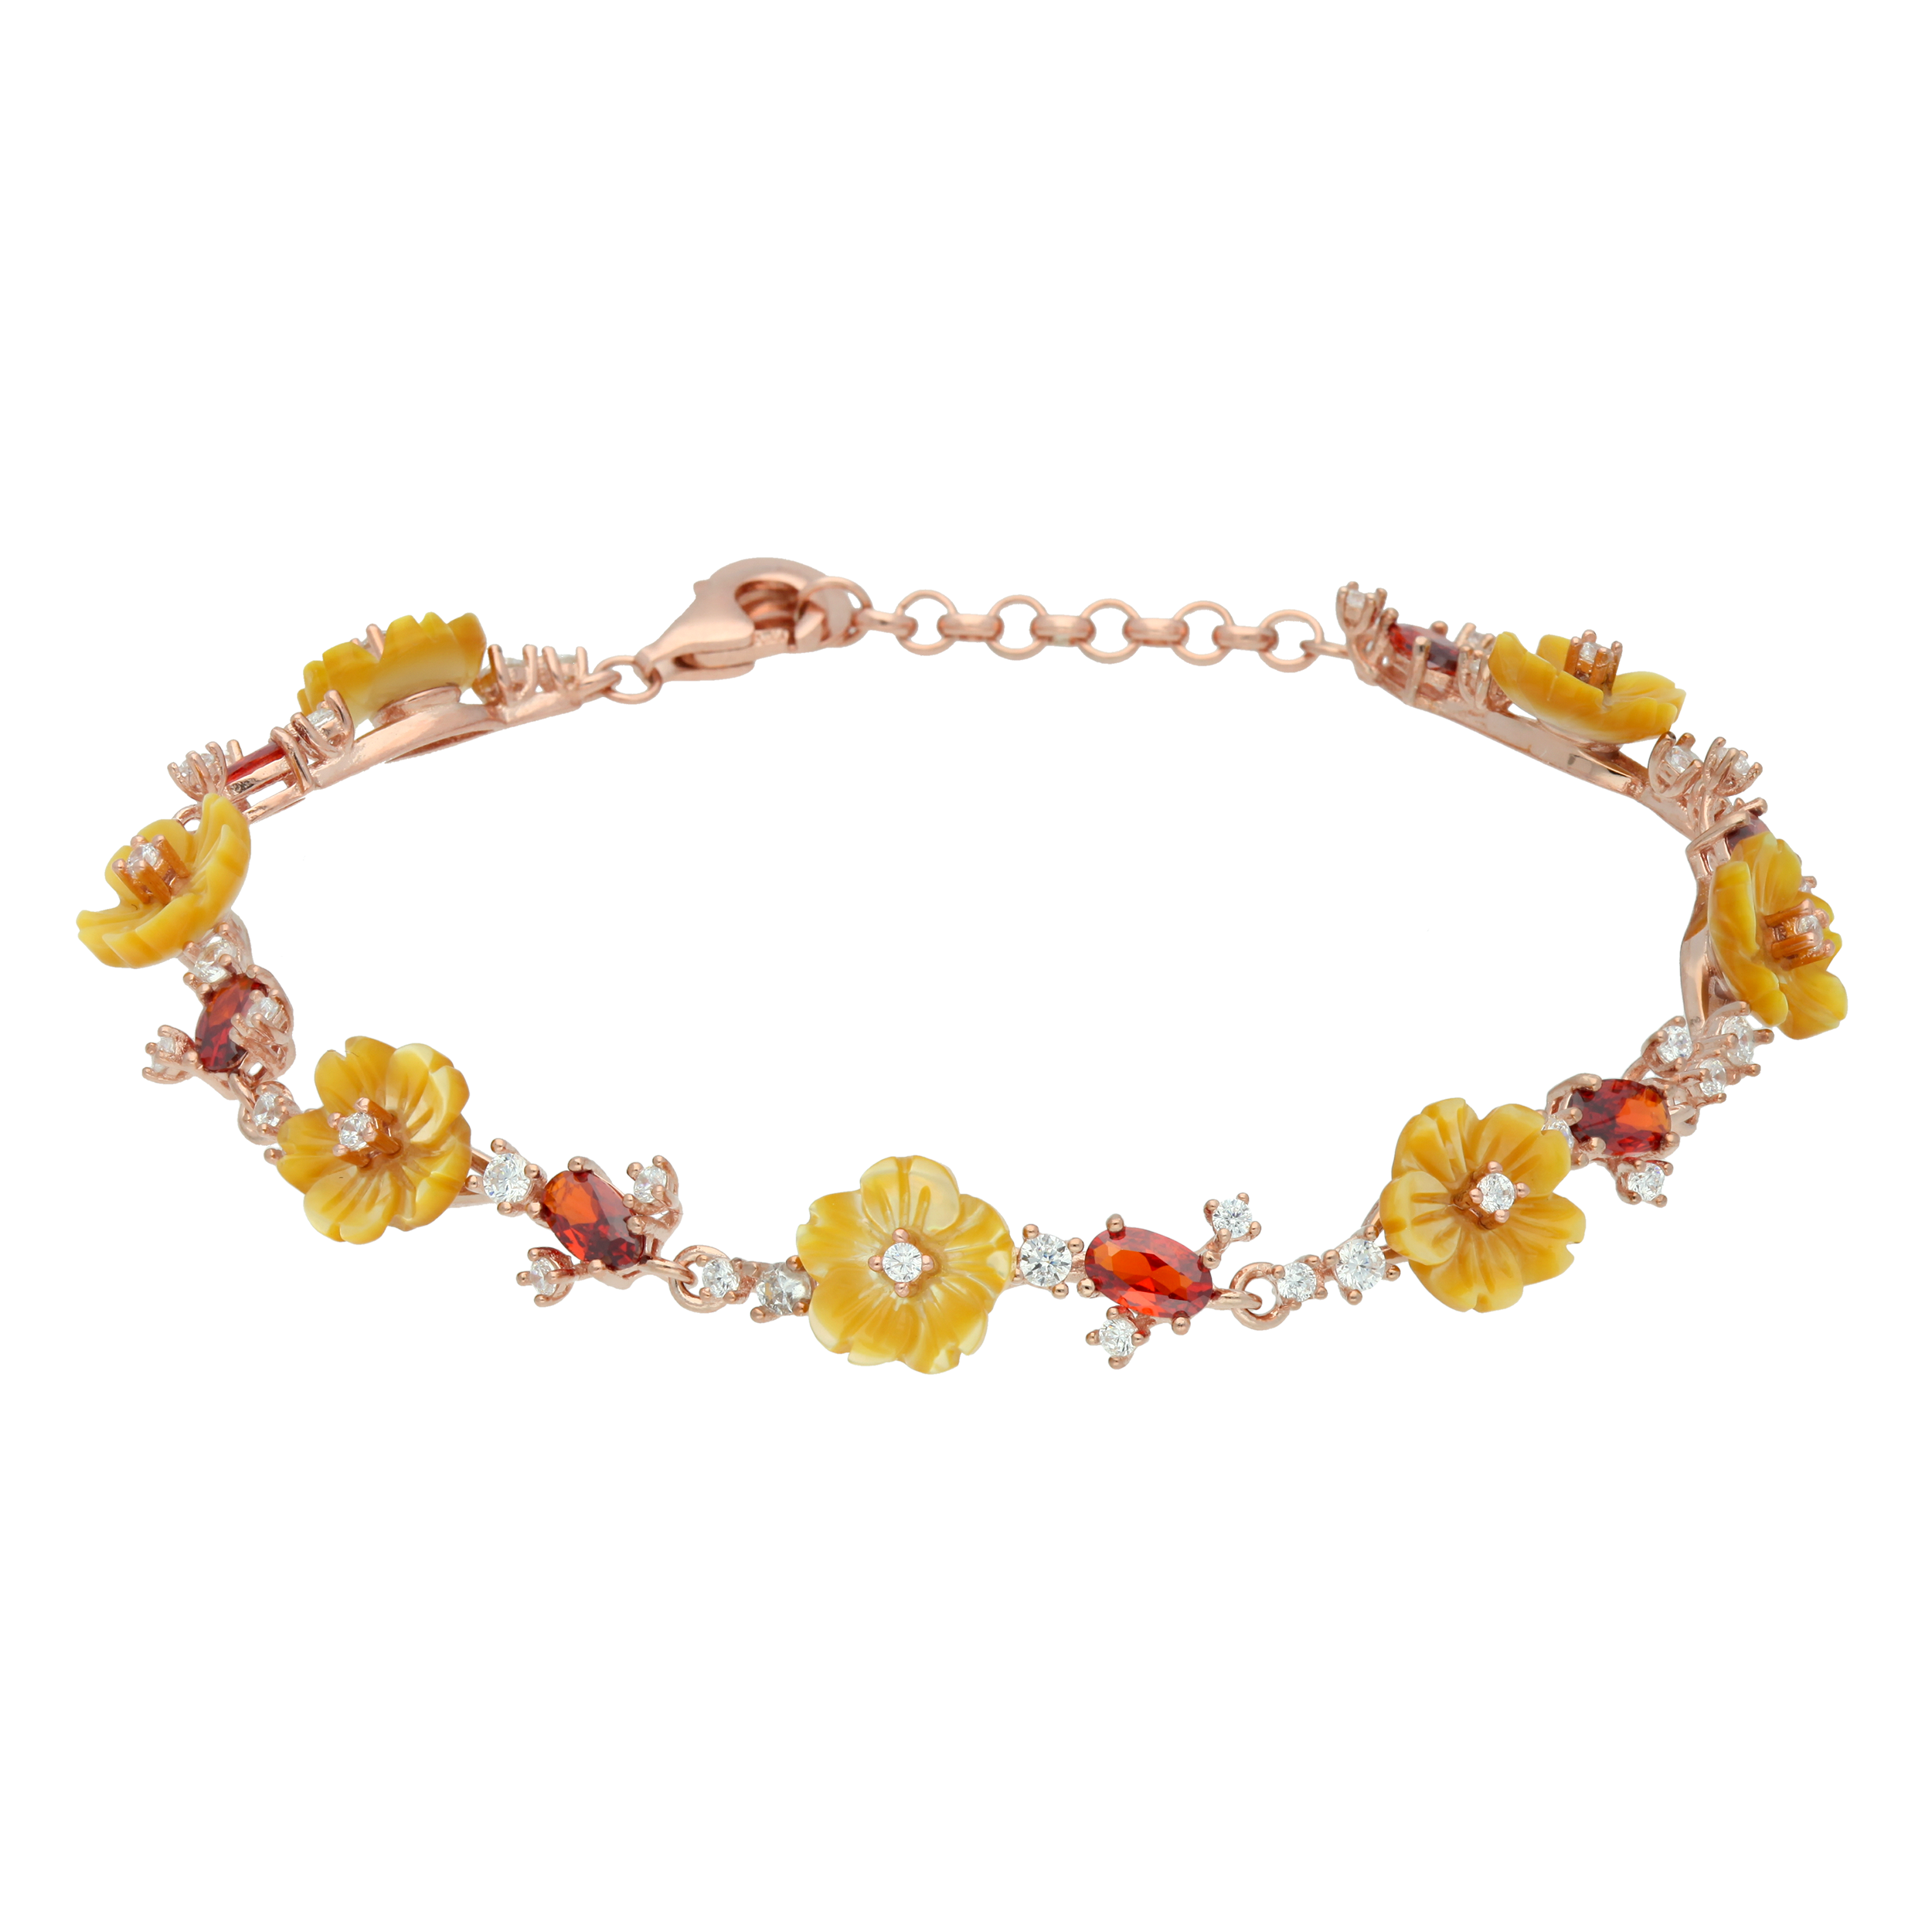 Spring Flower Bracelet - penelope-it.com